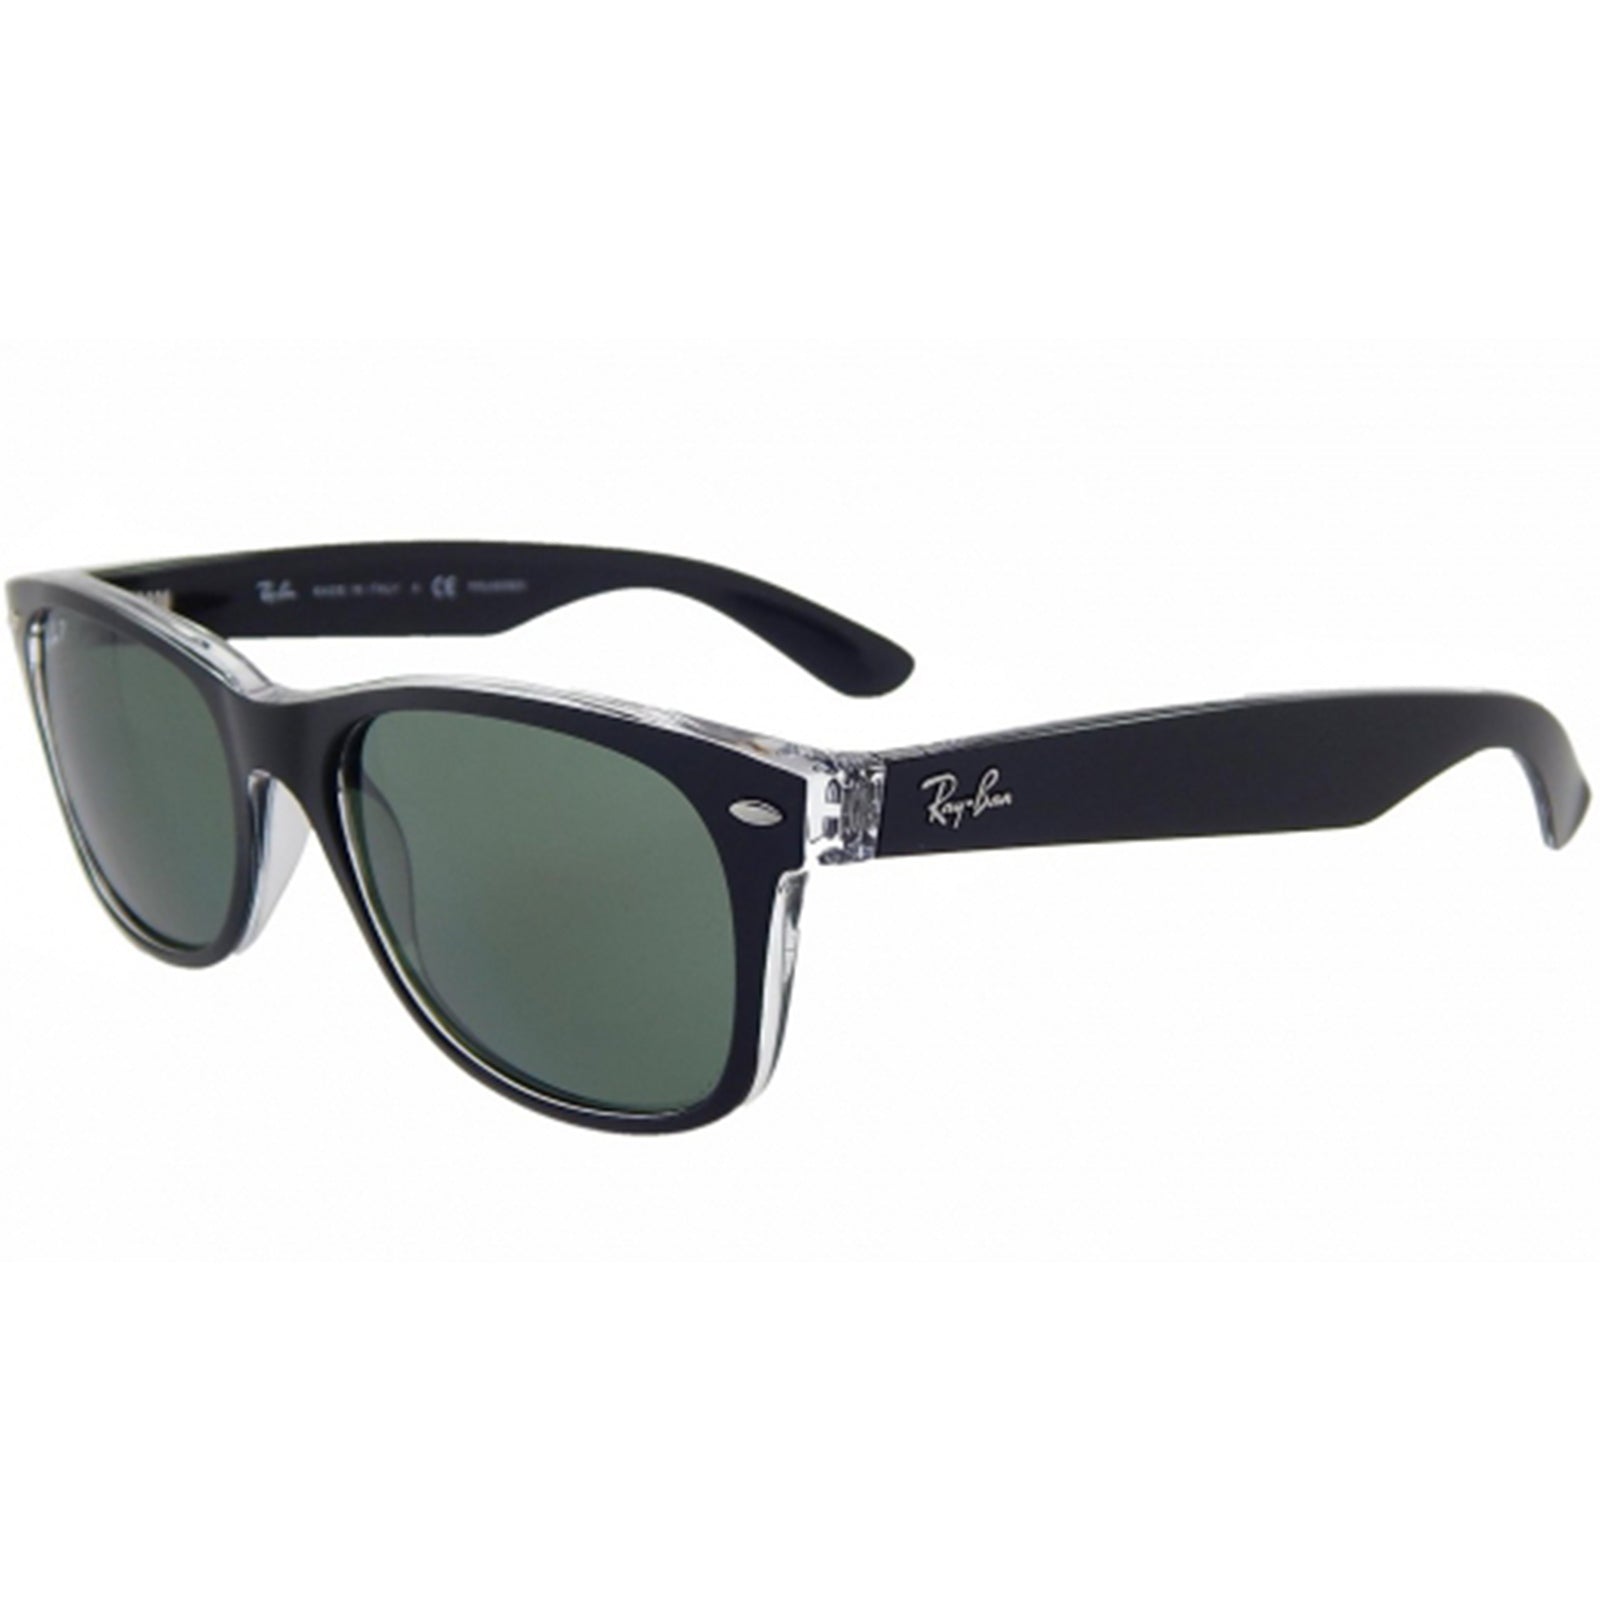 Ray-Ban New Wayfarer Classic Men's Lifestyle Sunglasses-0RB2132